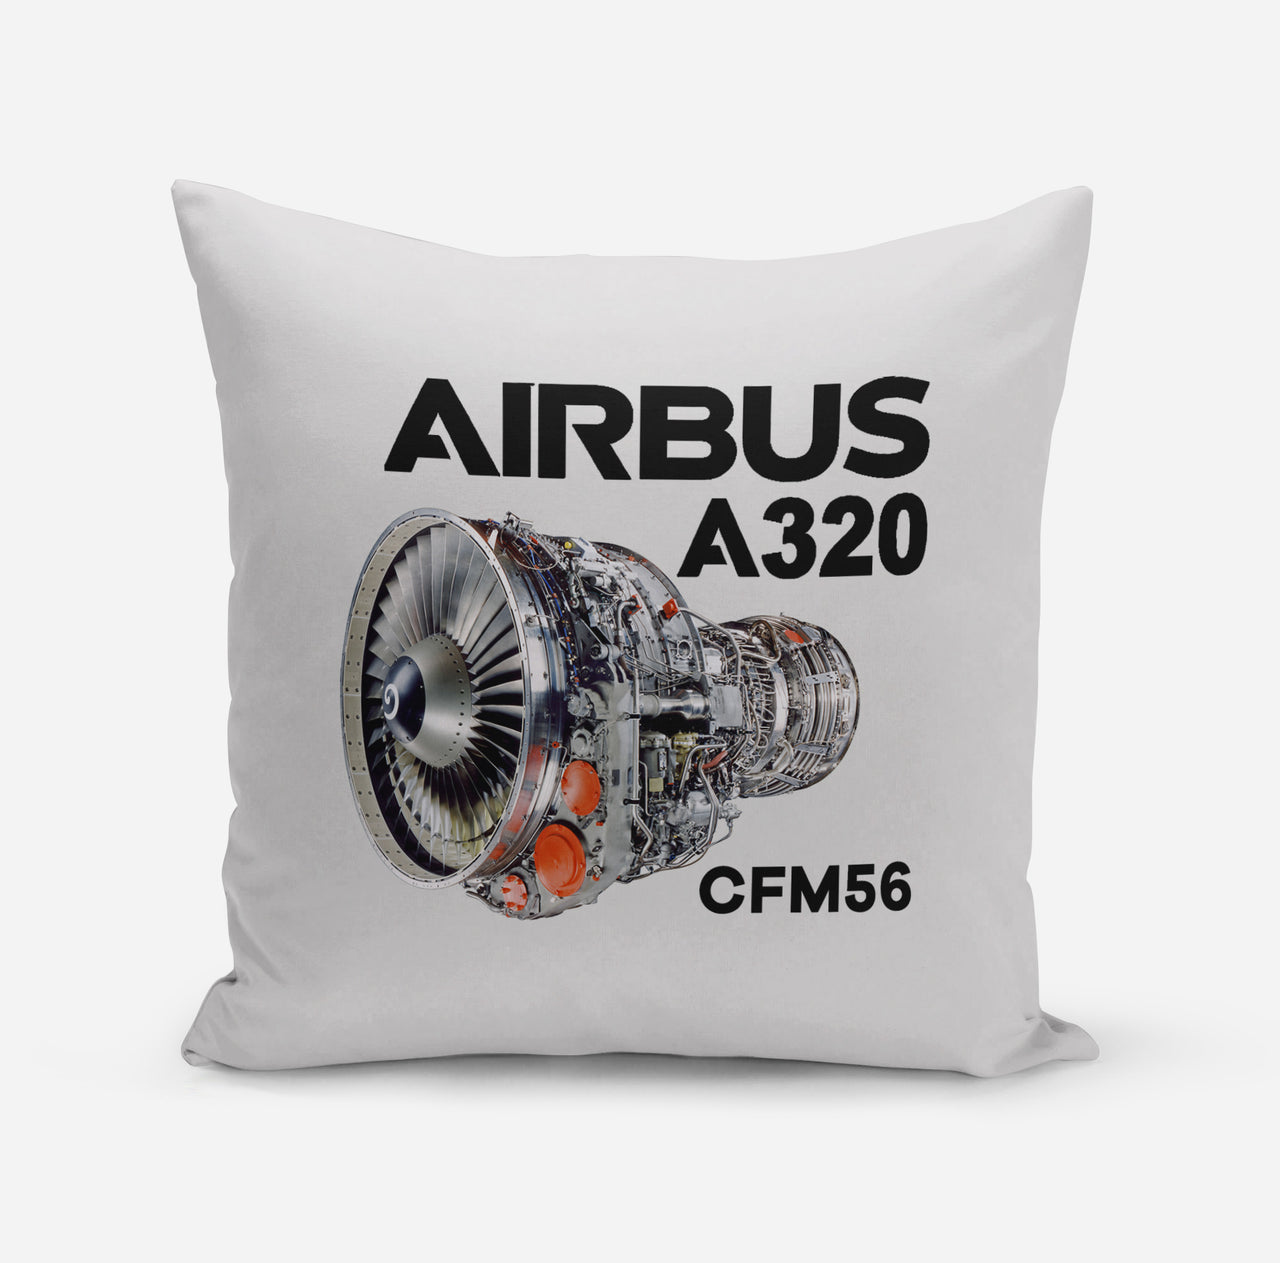 Airbus A320 & CFM56 Engine Designed Pillows